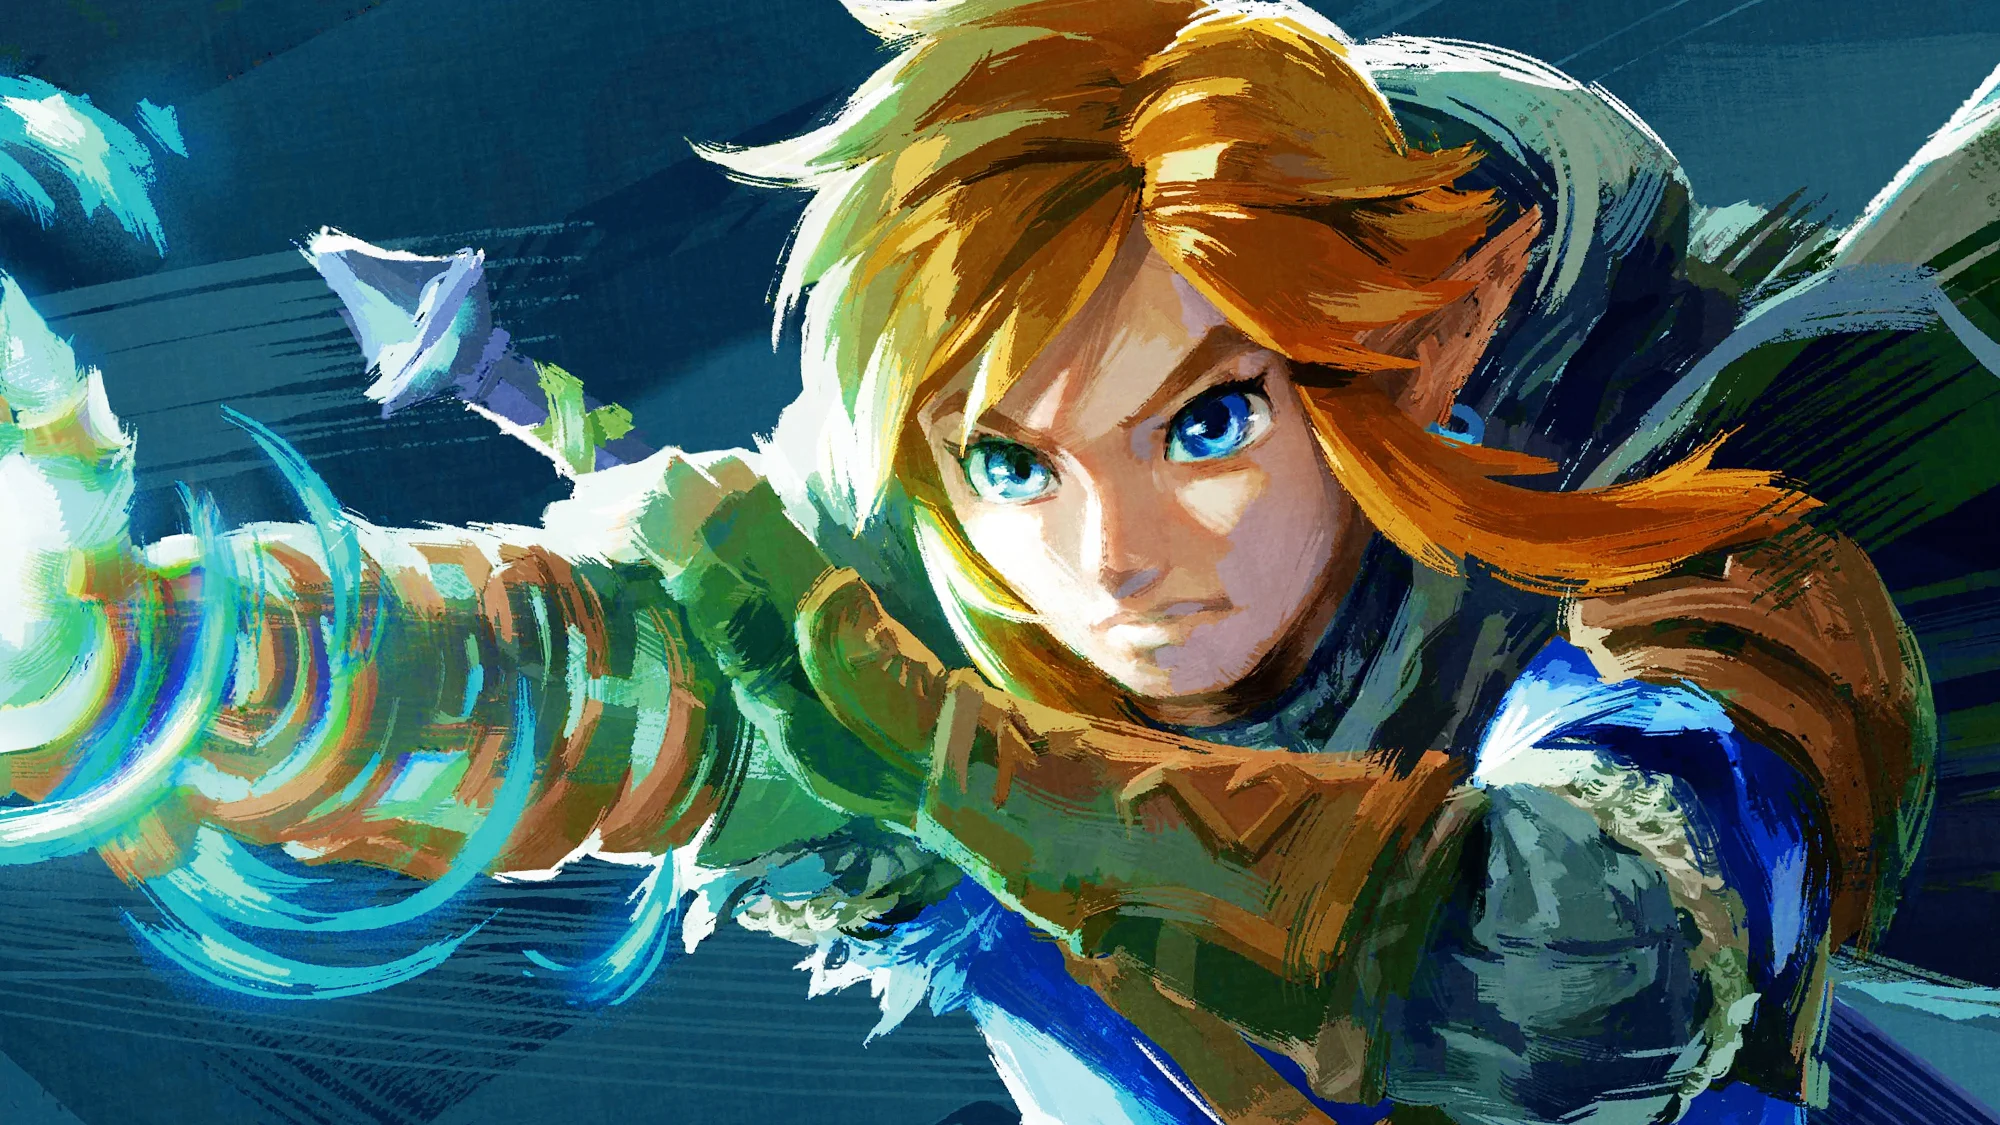 (news retirée demande Nintendo) Zelda : un remake sous Unreal Engine 5 totalement gratuit !